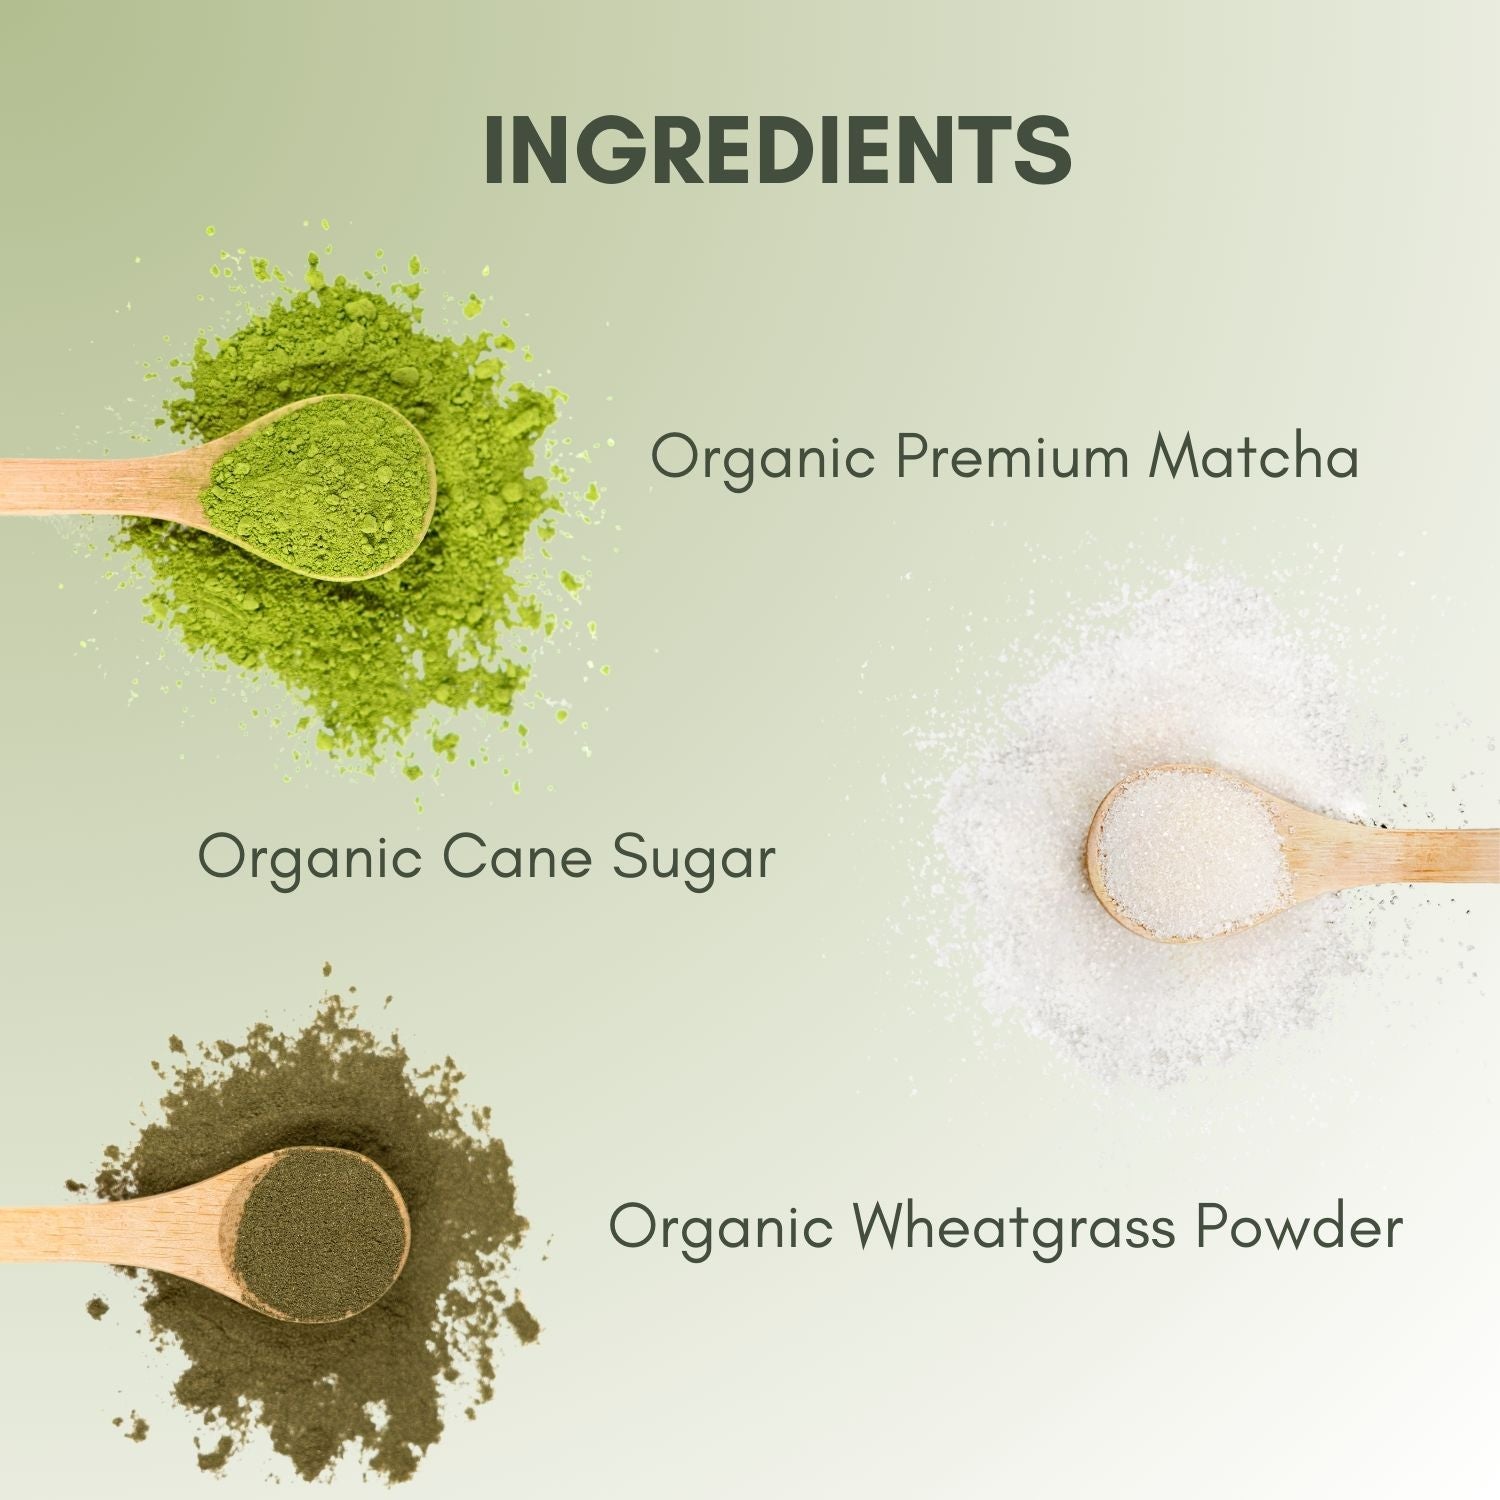 Organic Sweet Matcha Vitality